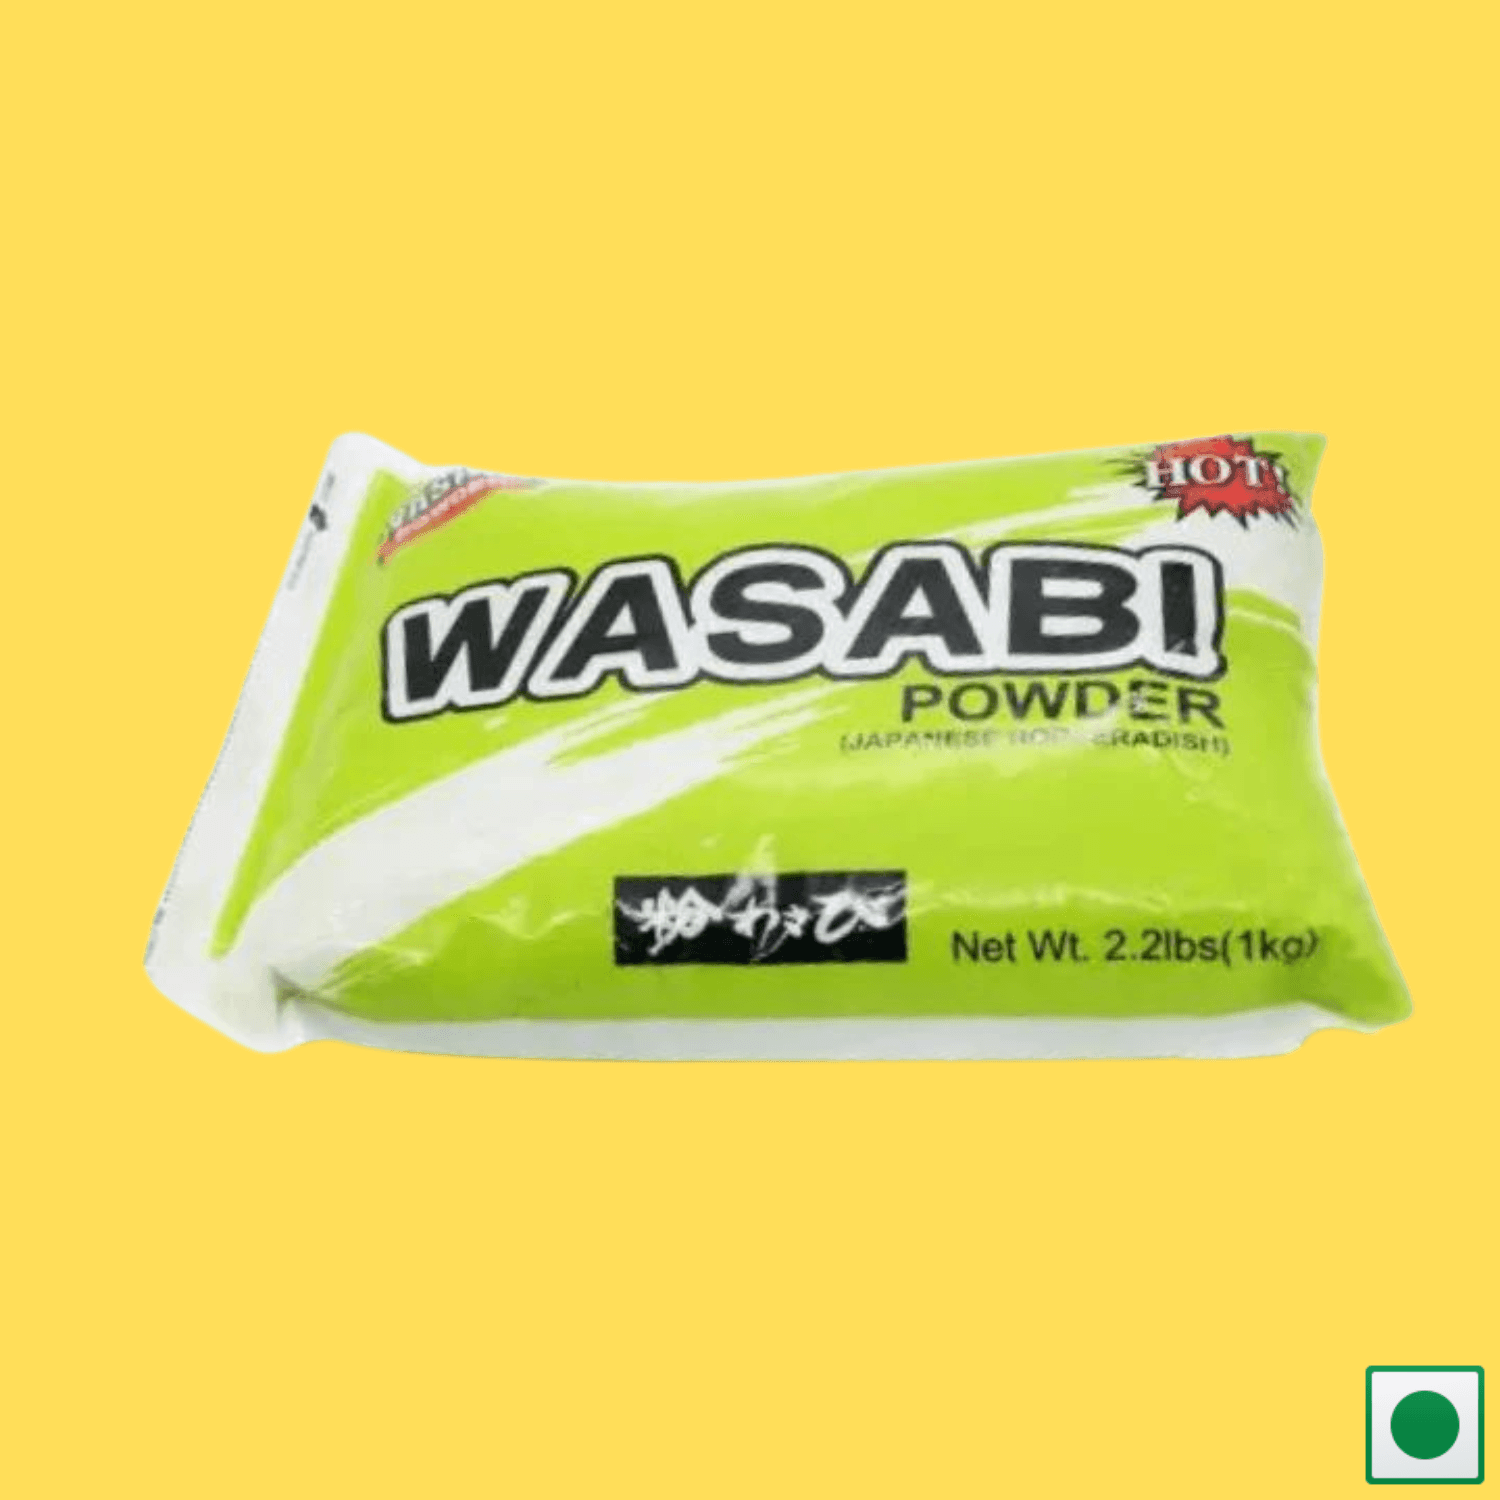 Yoka Wasabi Powder Japanese Horseradish, 1kg / 2.2lbs (IMPORTED) - Super 7 Mart